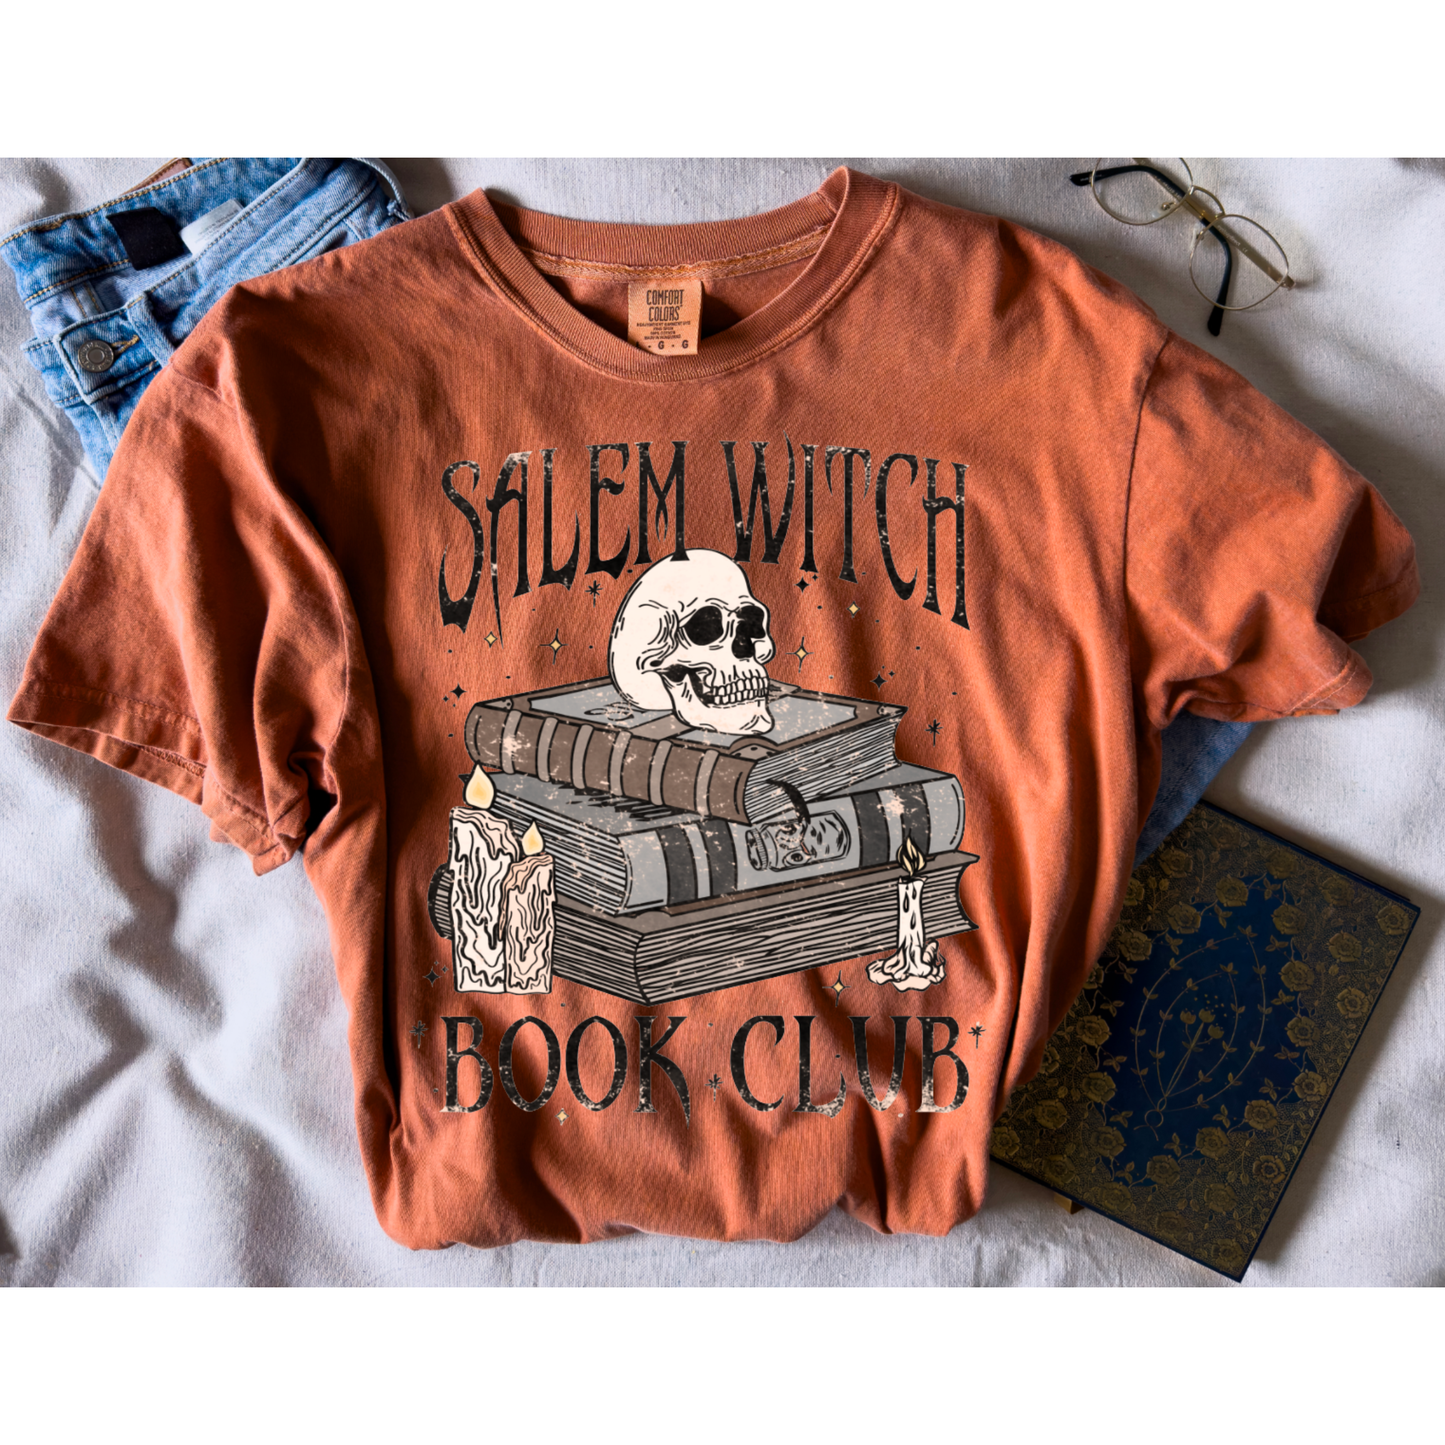 Salem witch book club - Comfort Color - Burnt orange